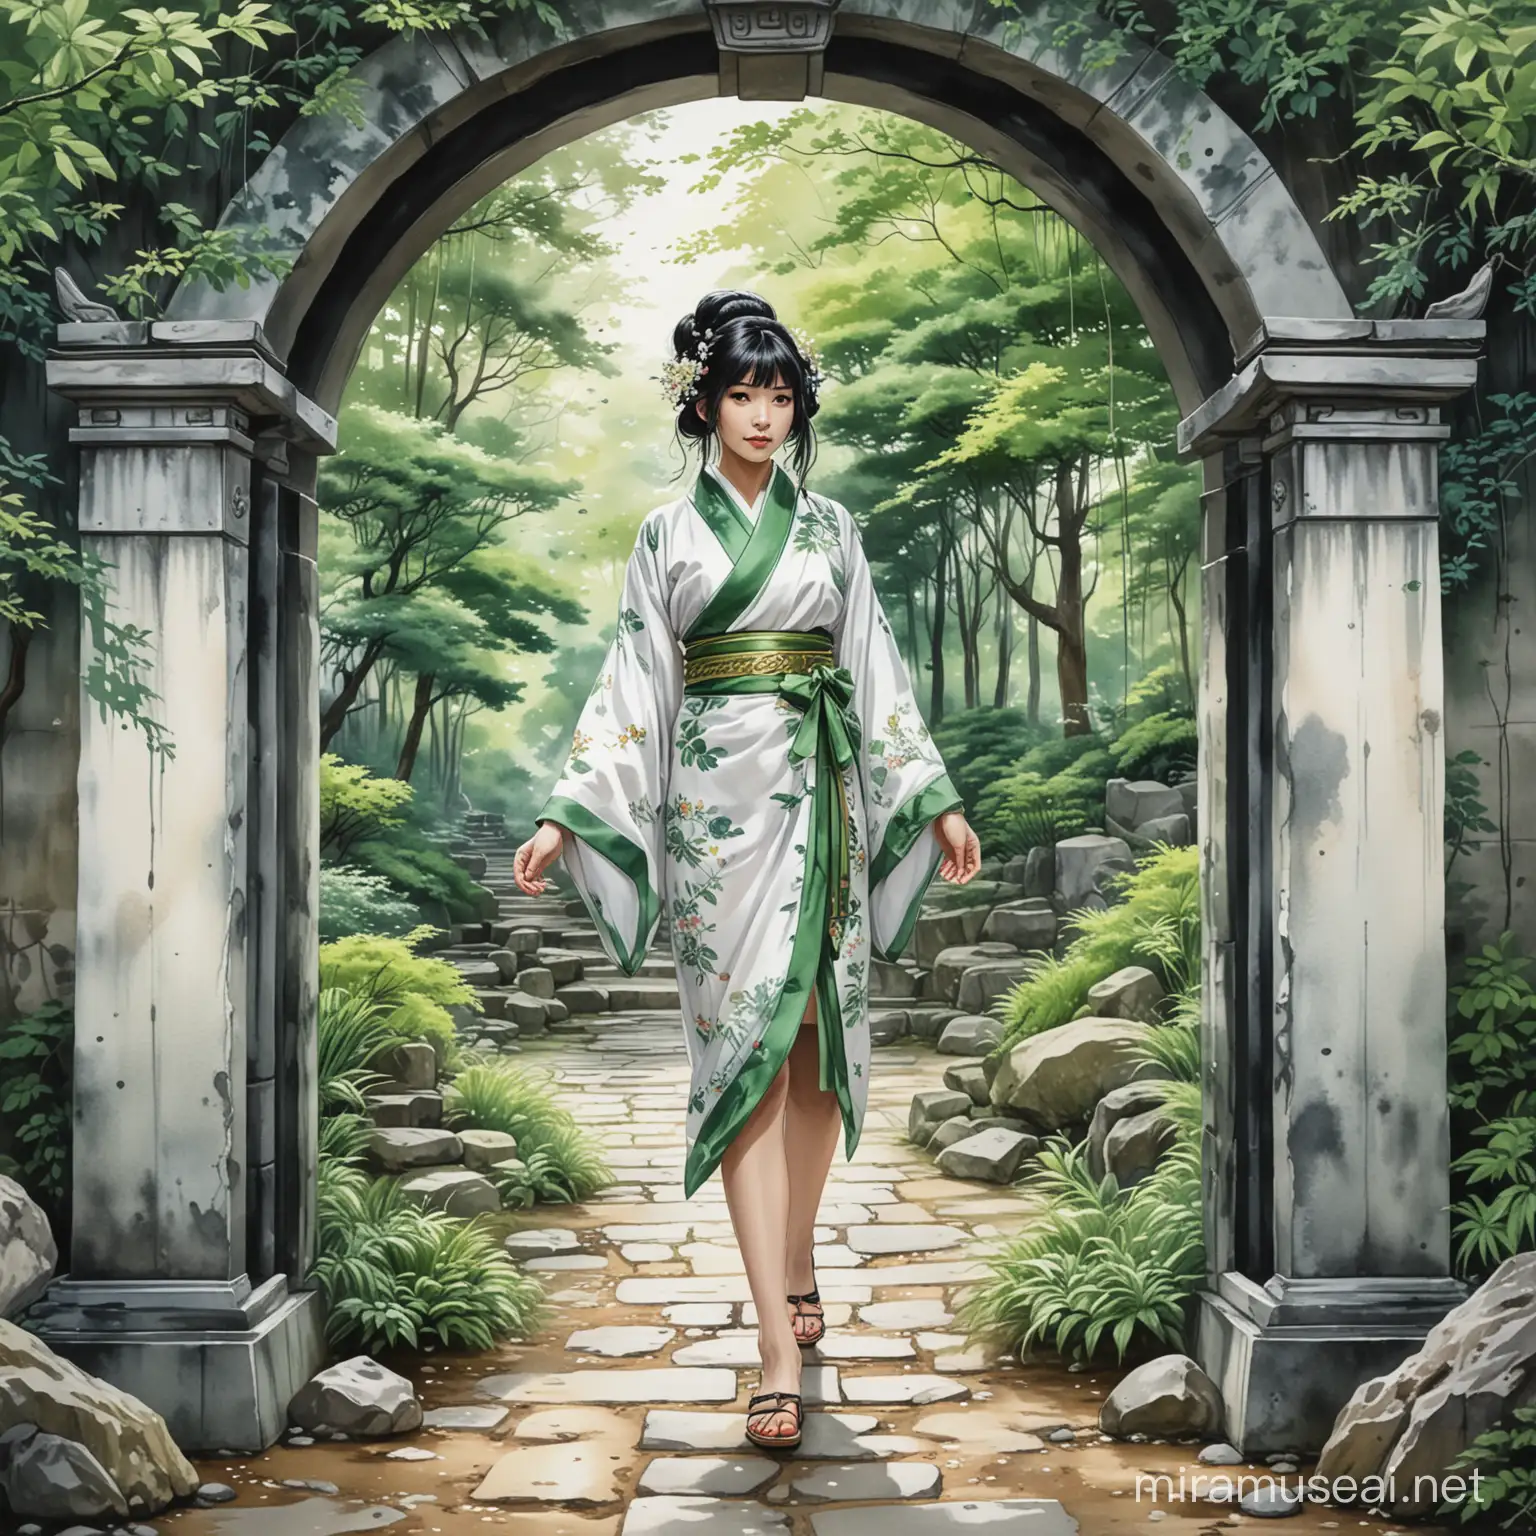 Japanese Shrine Maiden Walking Through Green Magic Portal